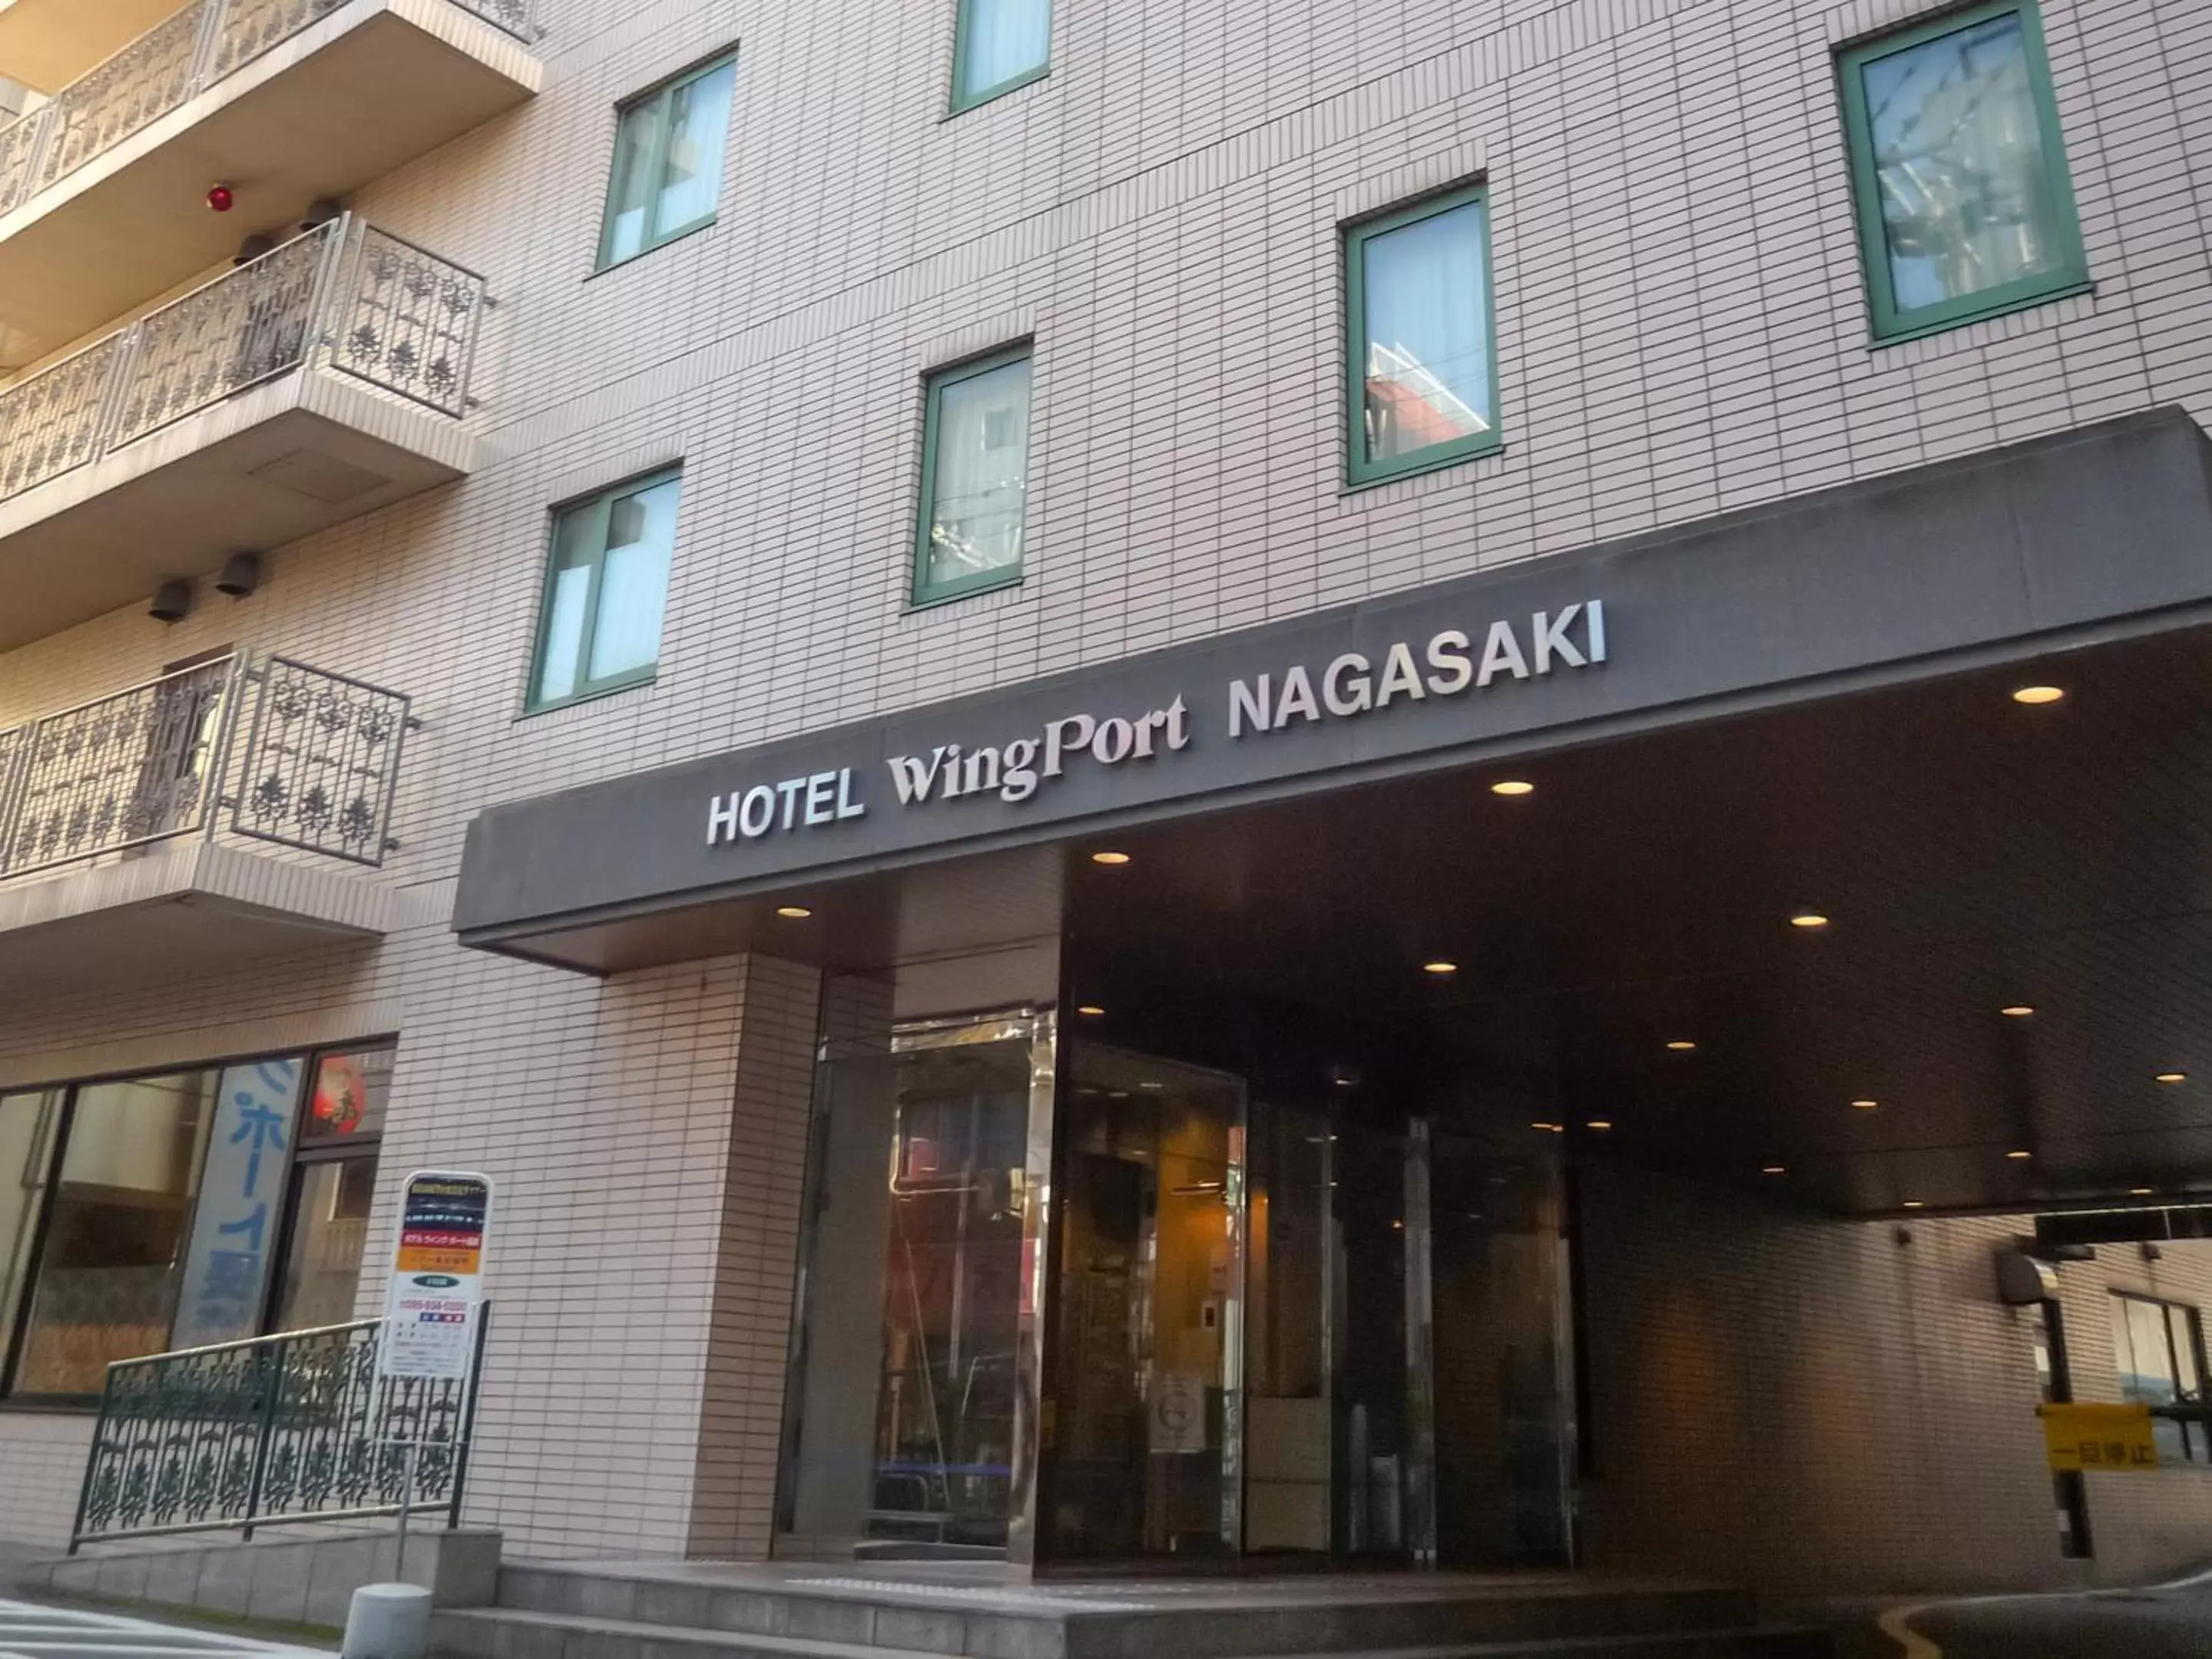 Facade/entrance in Hotel Wing Port Nagasaki